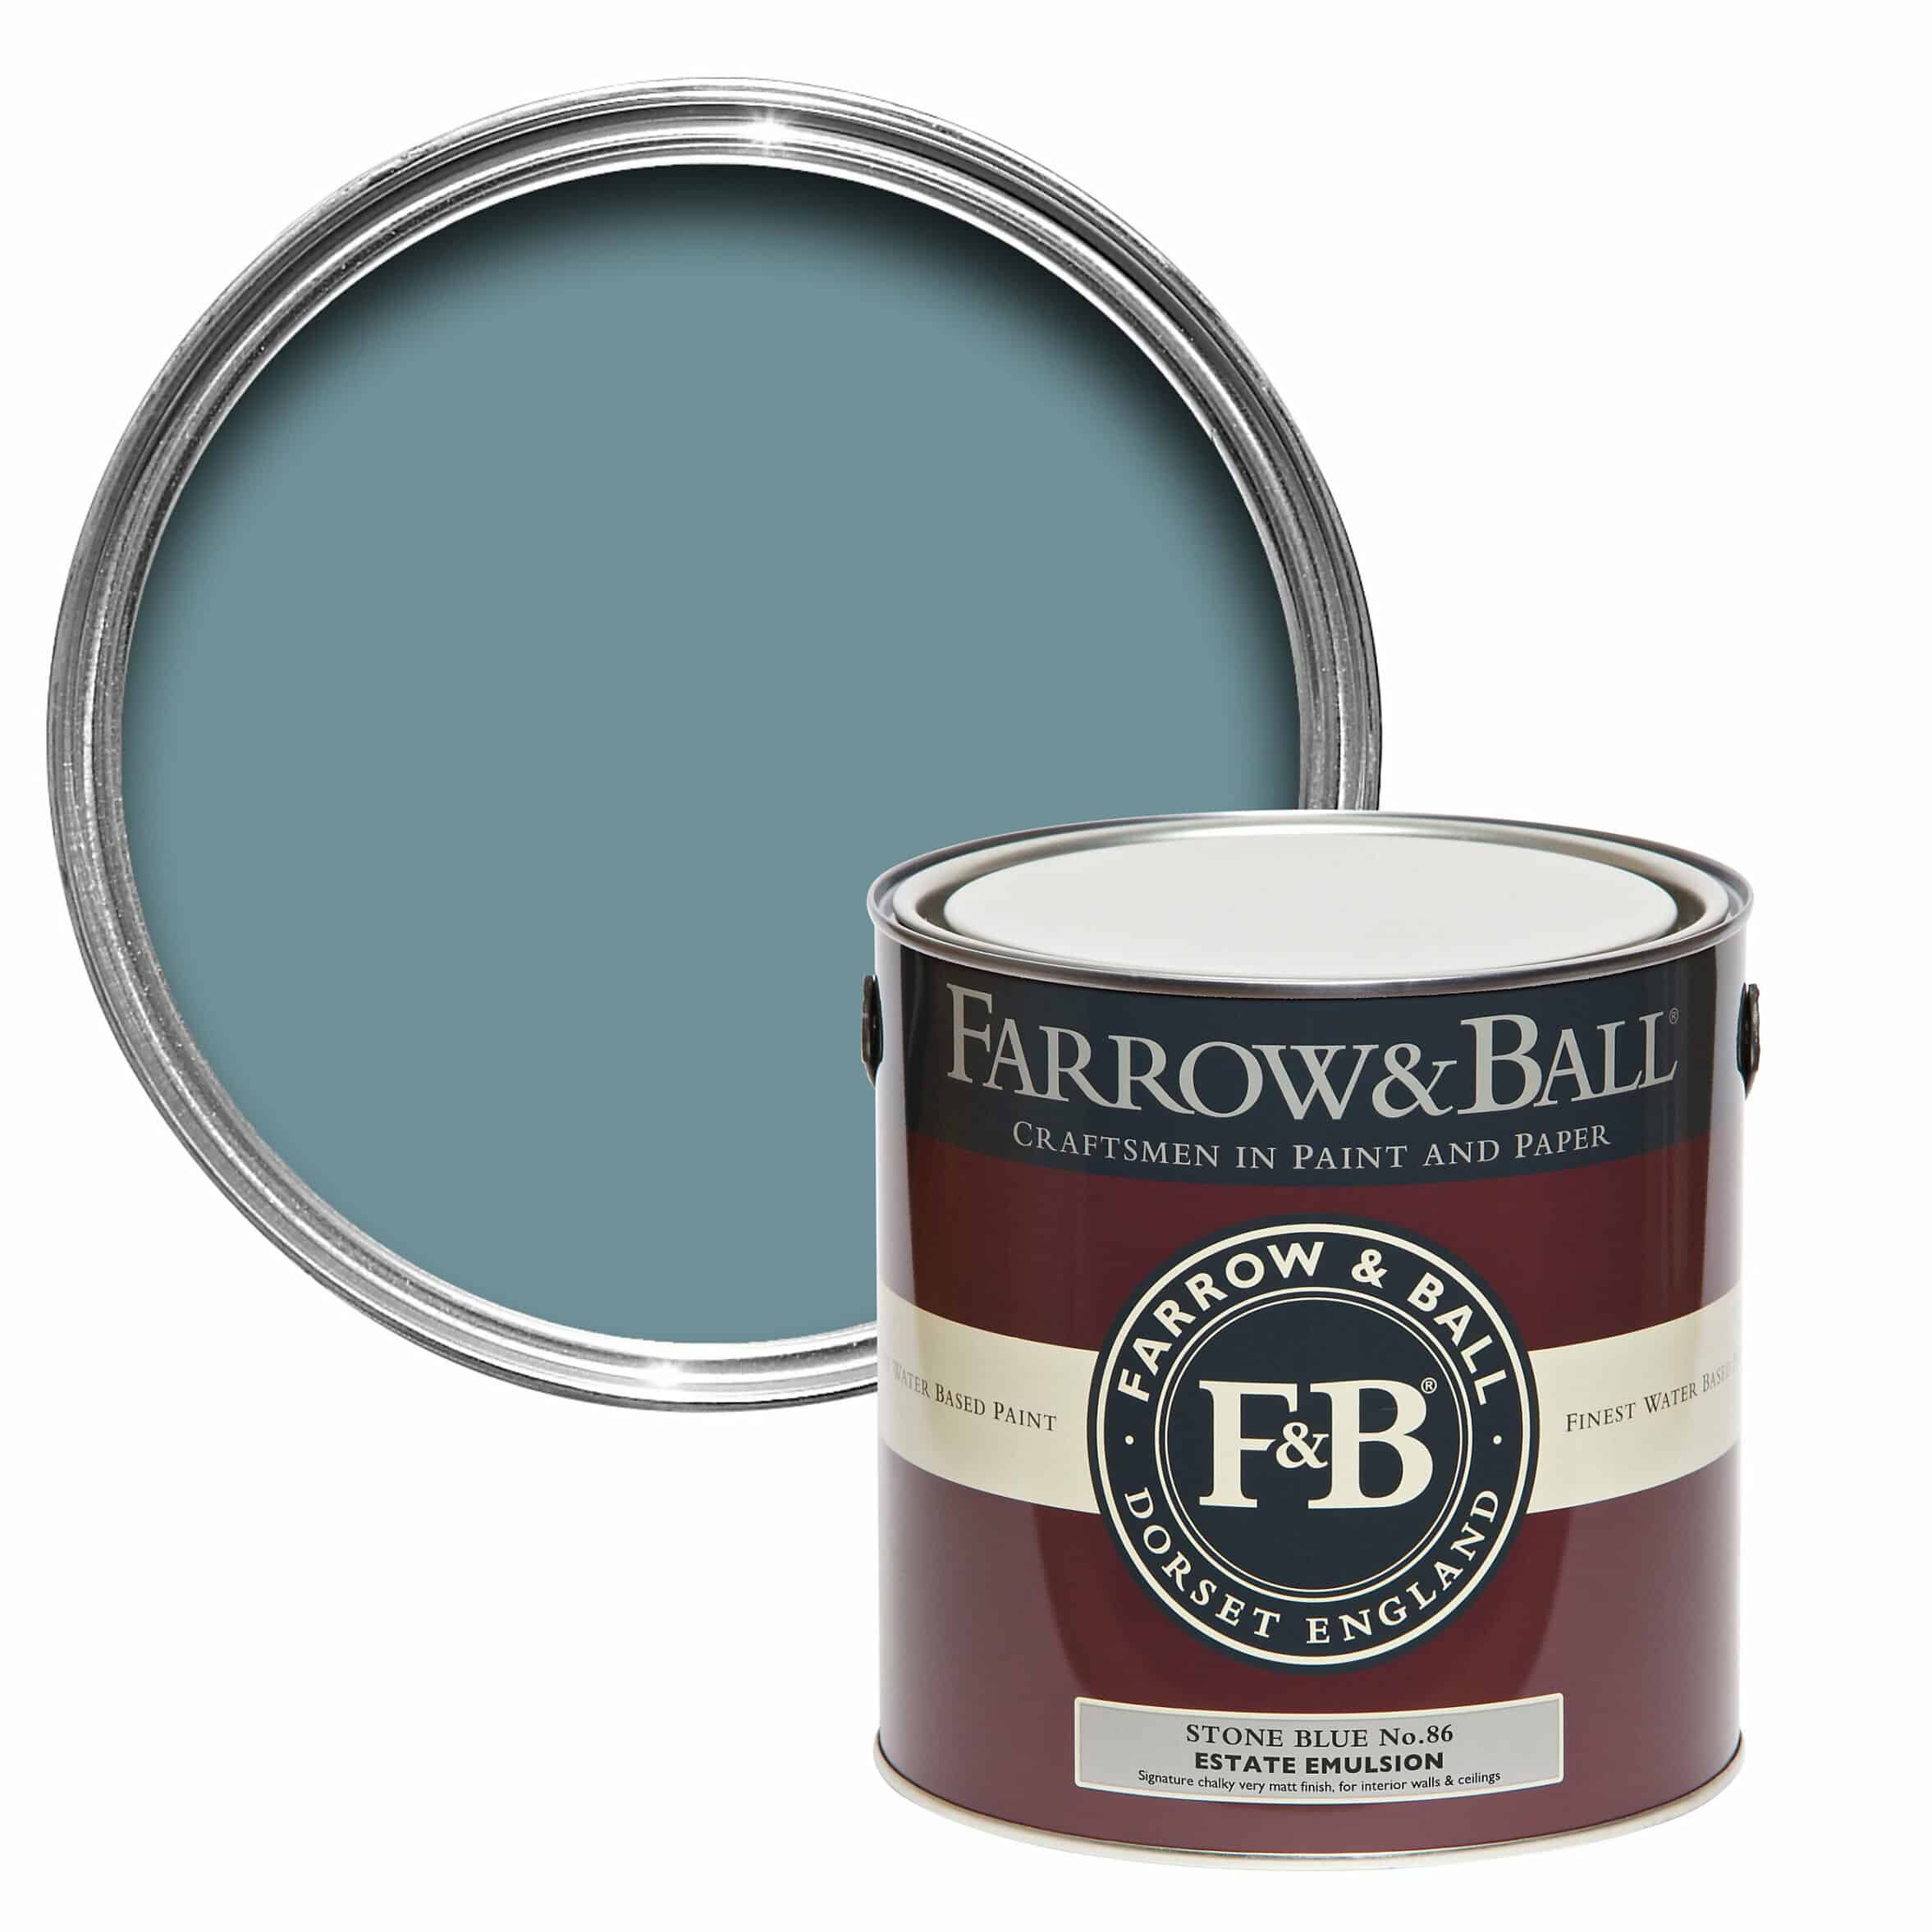 Farrow & Ball Estate Stone blue No.86 Matt Emulsion paint, 2.5L-8621